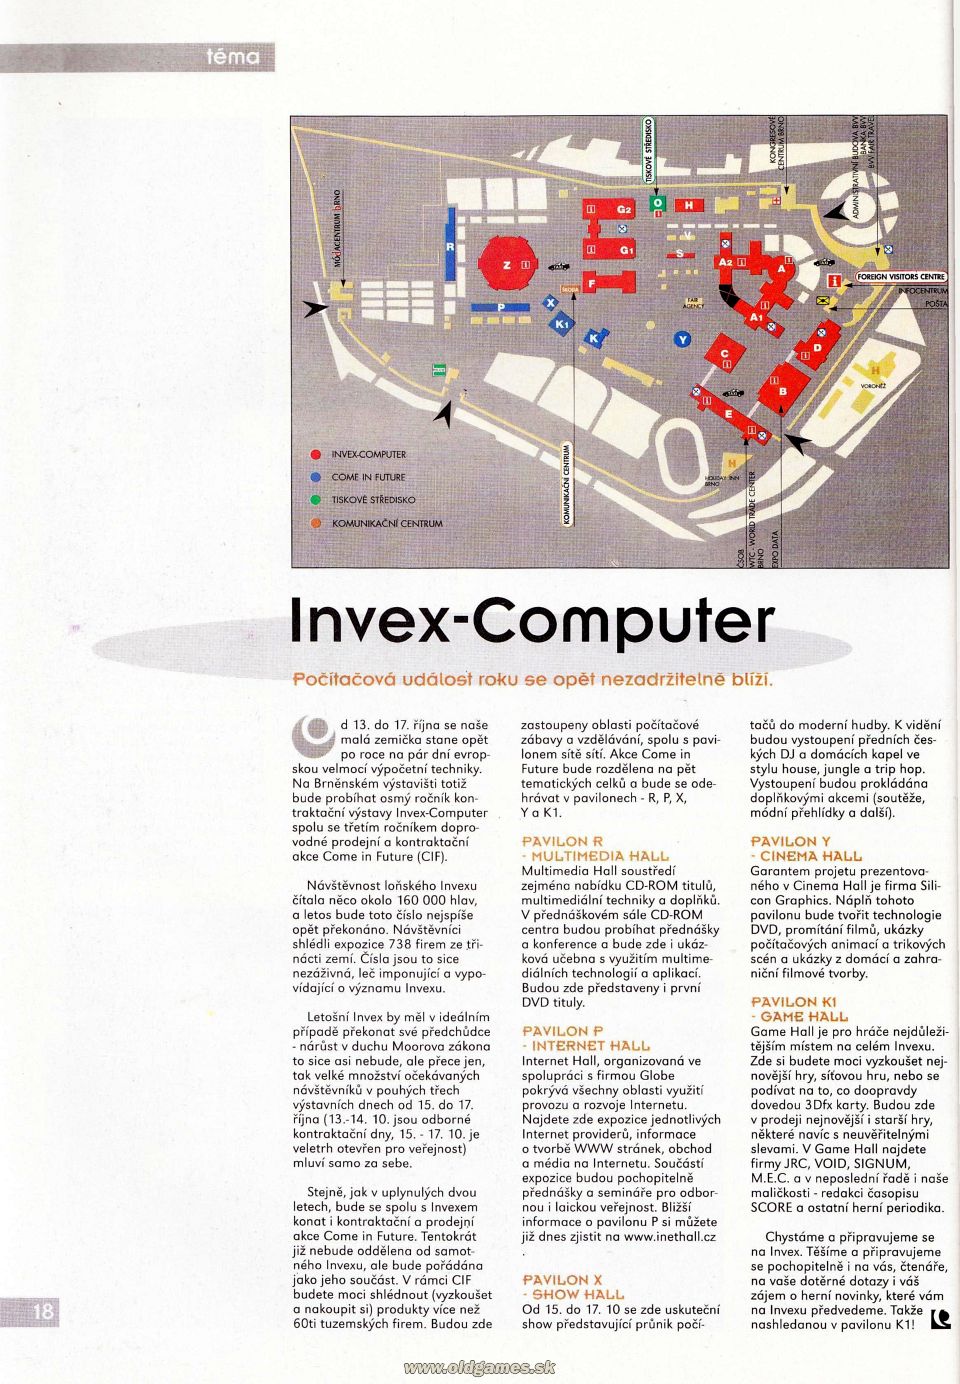 Invex-Computer